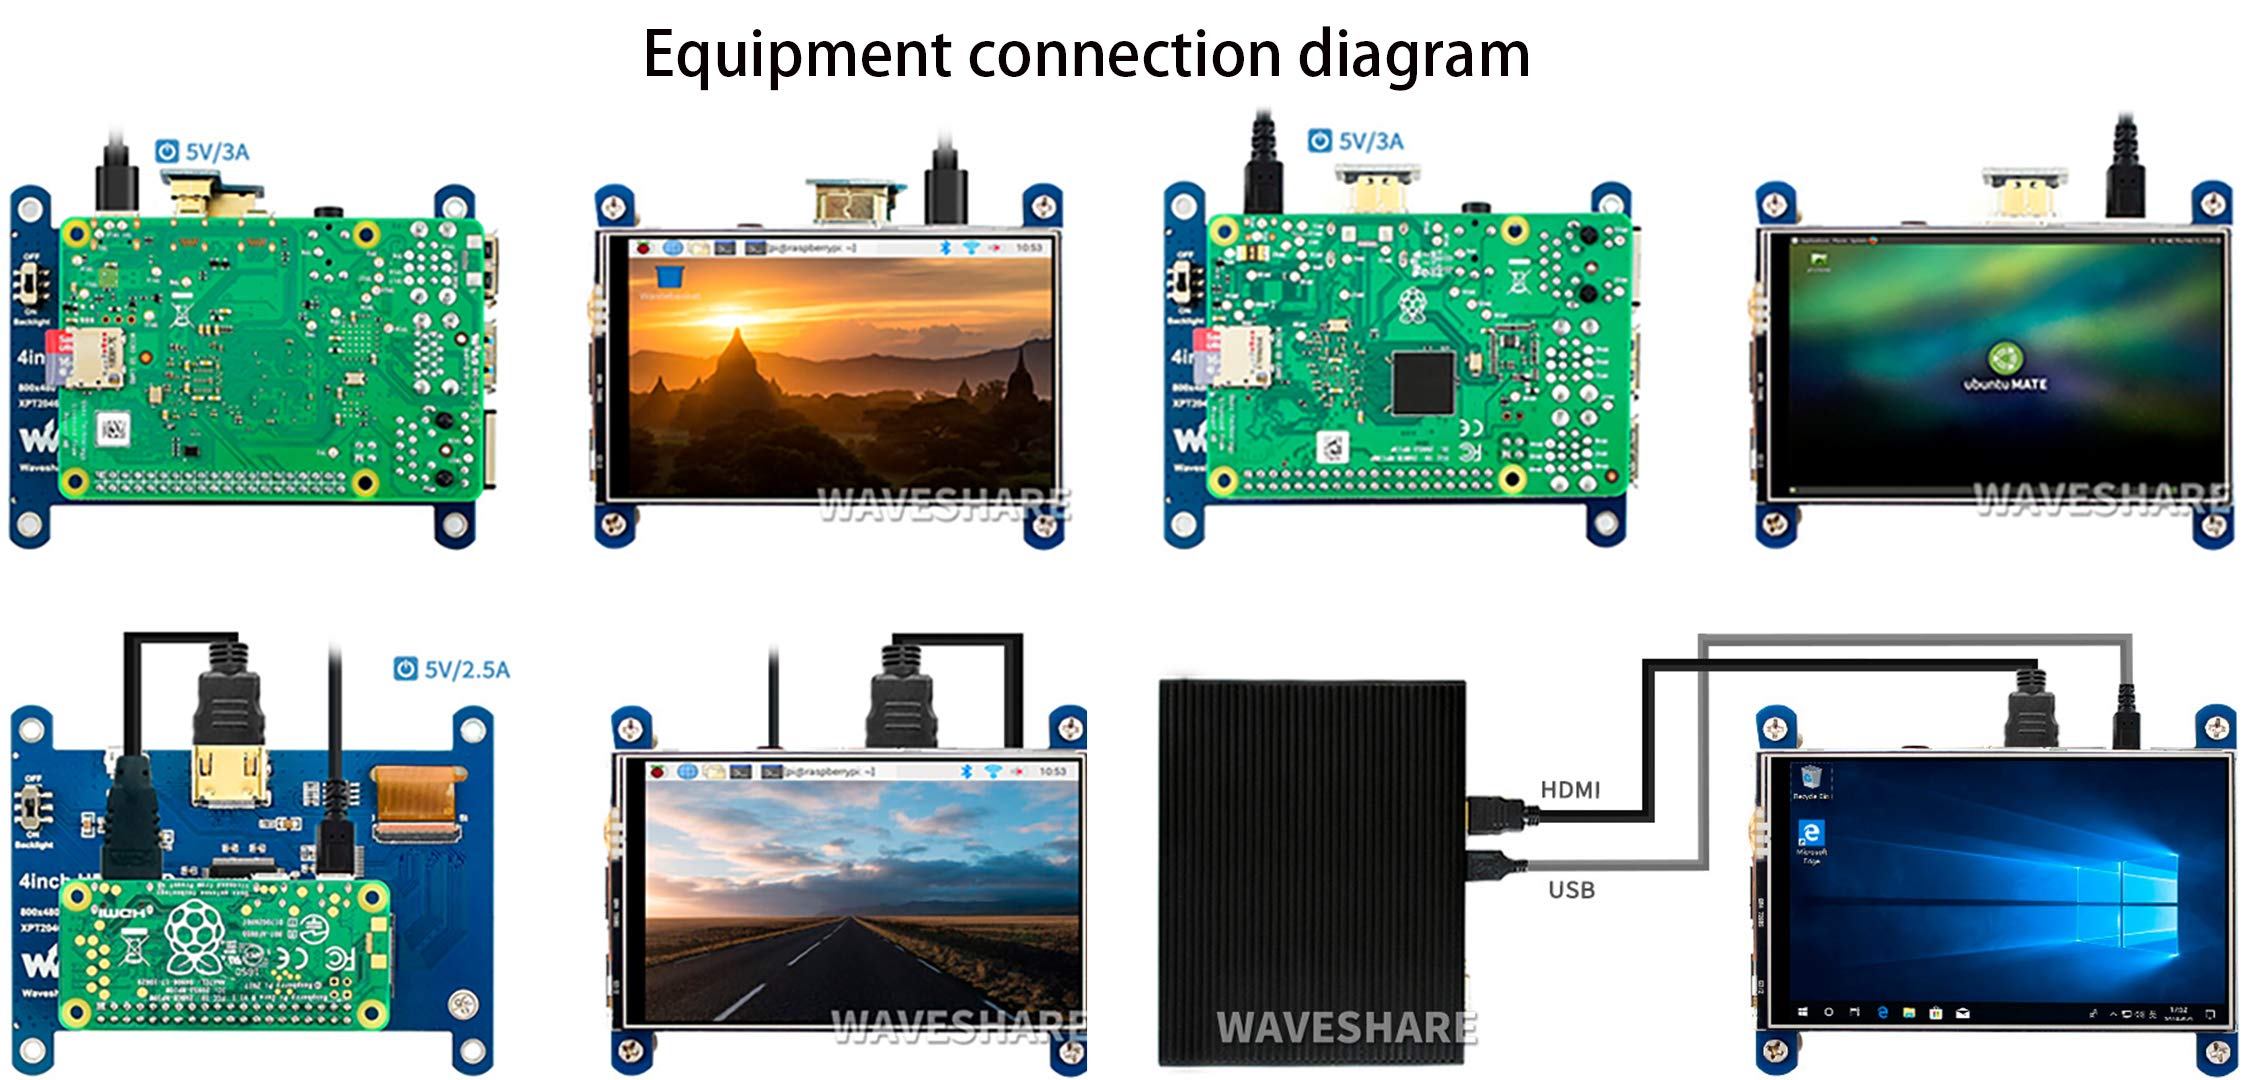 waveshare 4 inch HDMI LCD IPS Display 800x480 Resolution Resistive Touch Screen HDMI Interface for Raspberry Pi 4B/3B+/3B/2B/B+/A+/Zero W,Support Raspbian/Ubuntu/Kali/Retropie